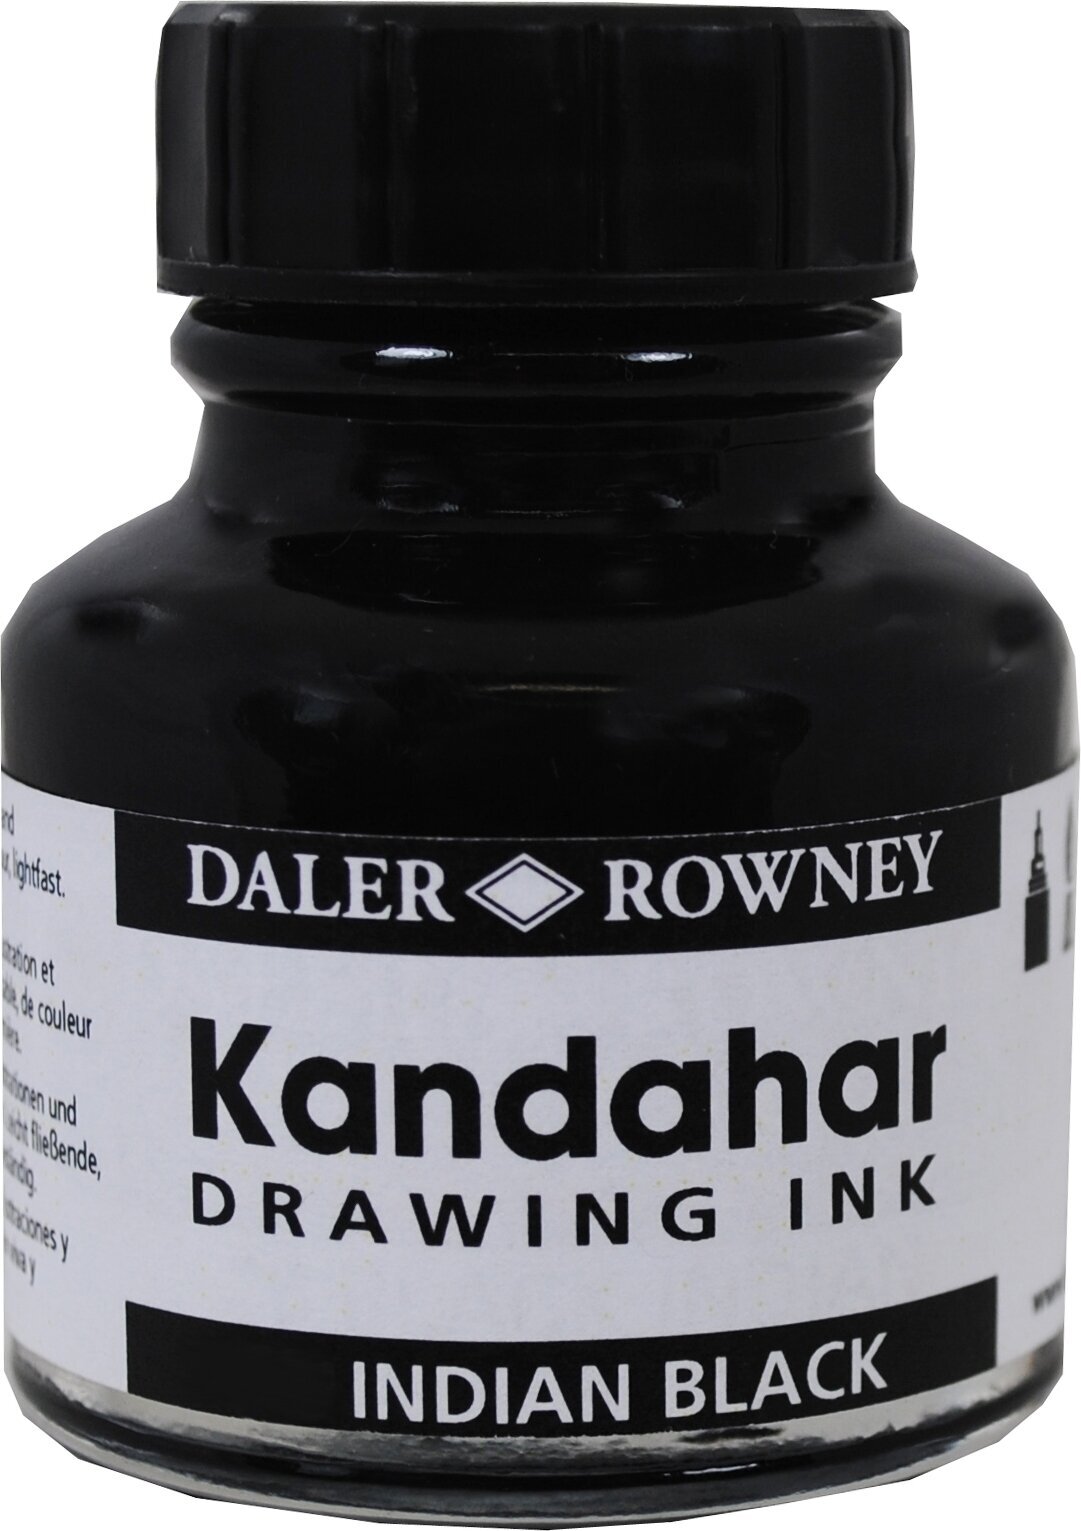 Ink Daler Rowney Kandahar Drawing Ink Black 28 ml 1 pc